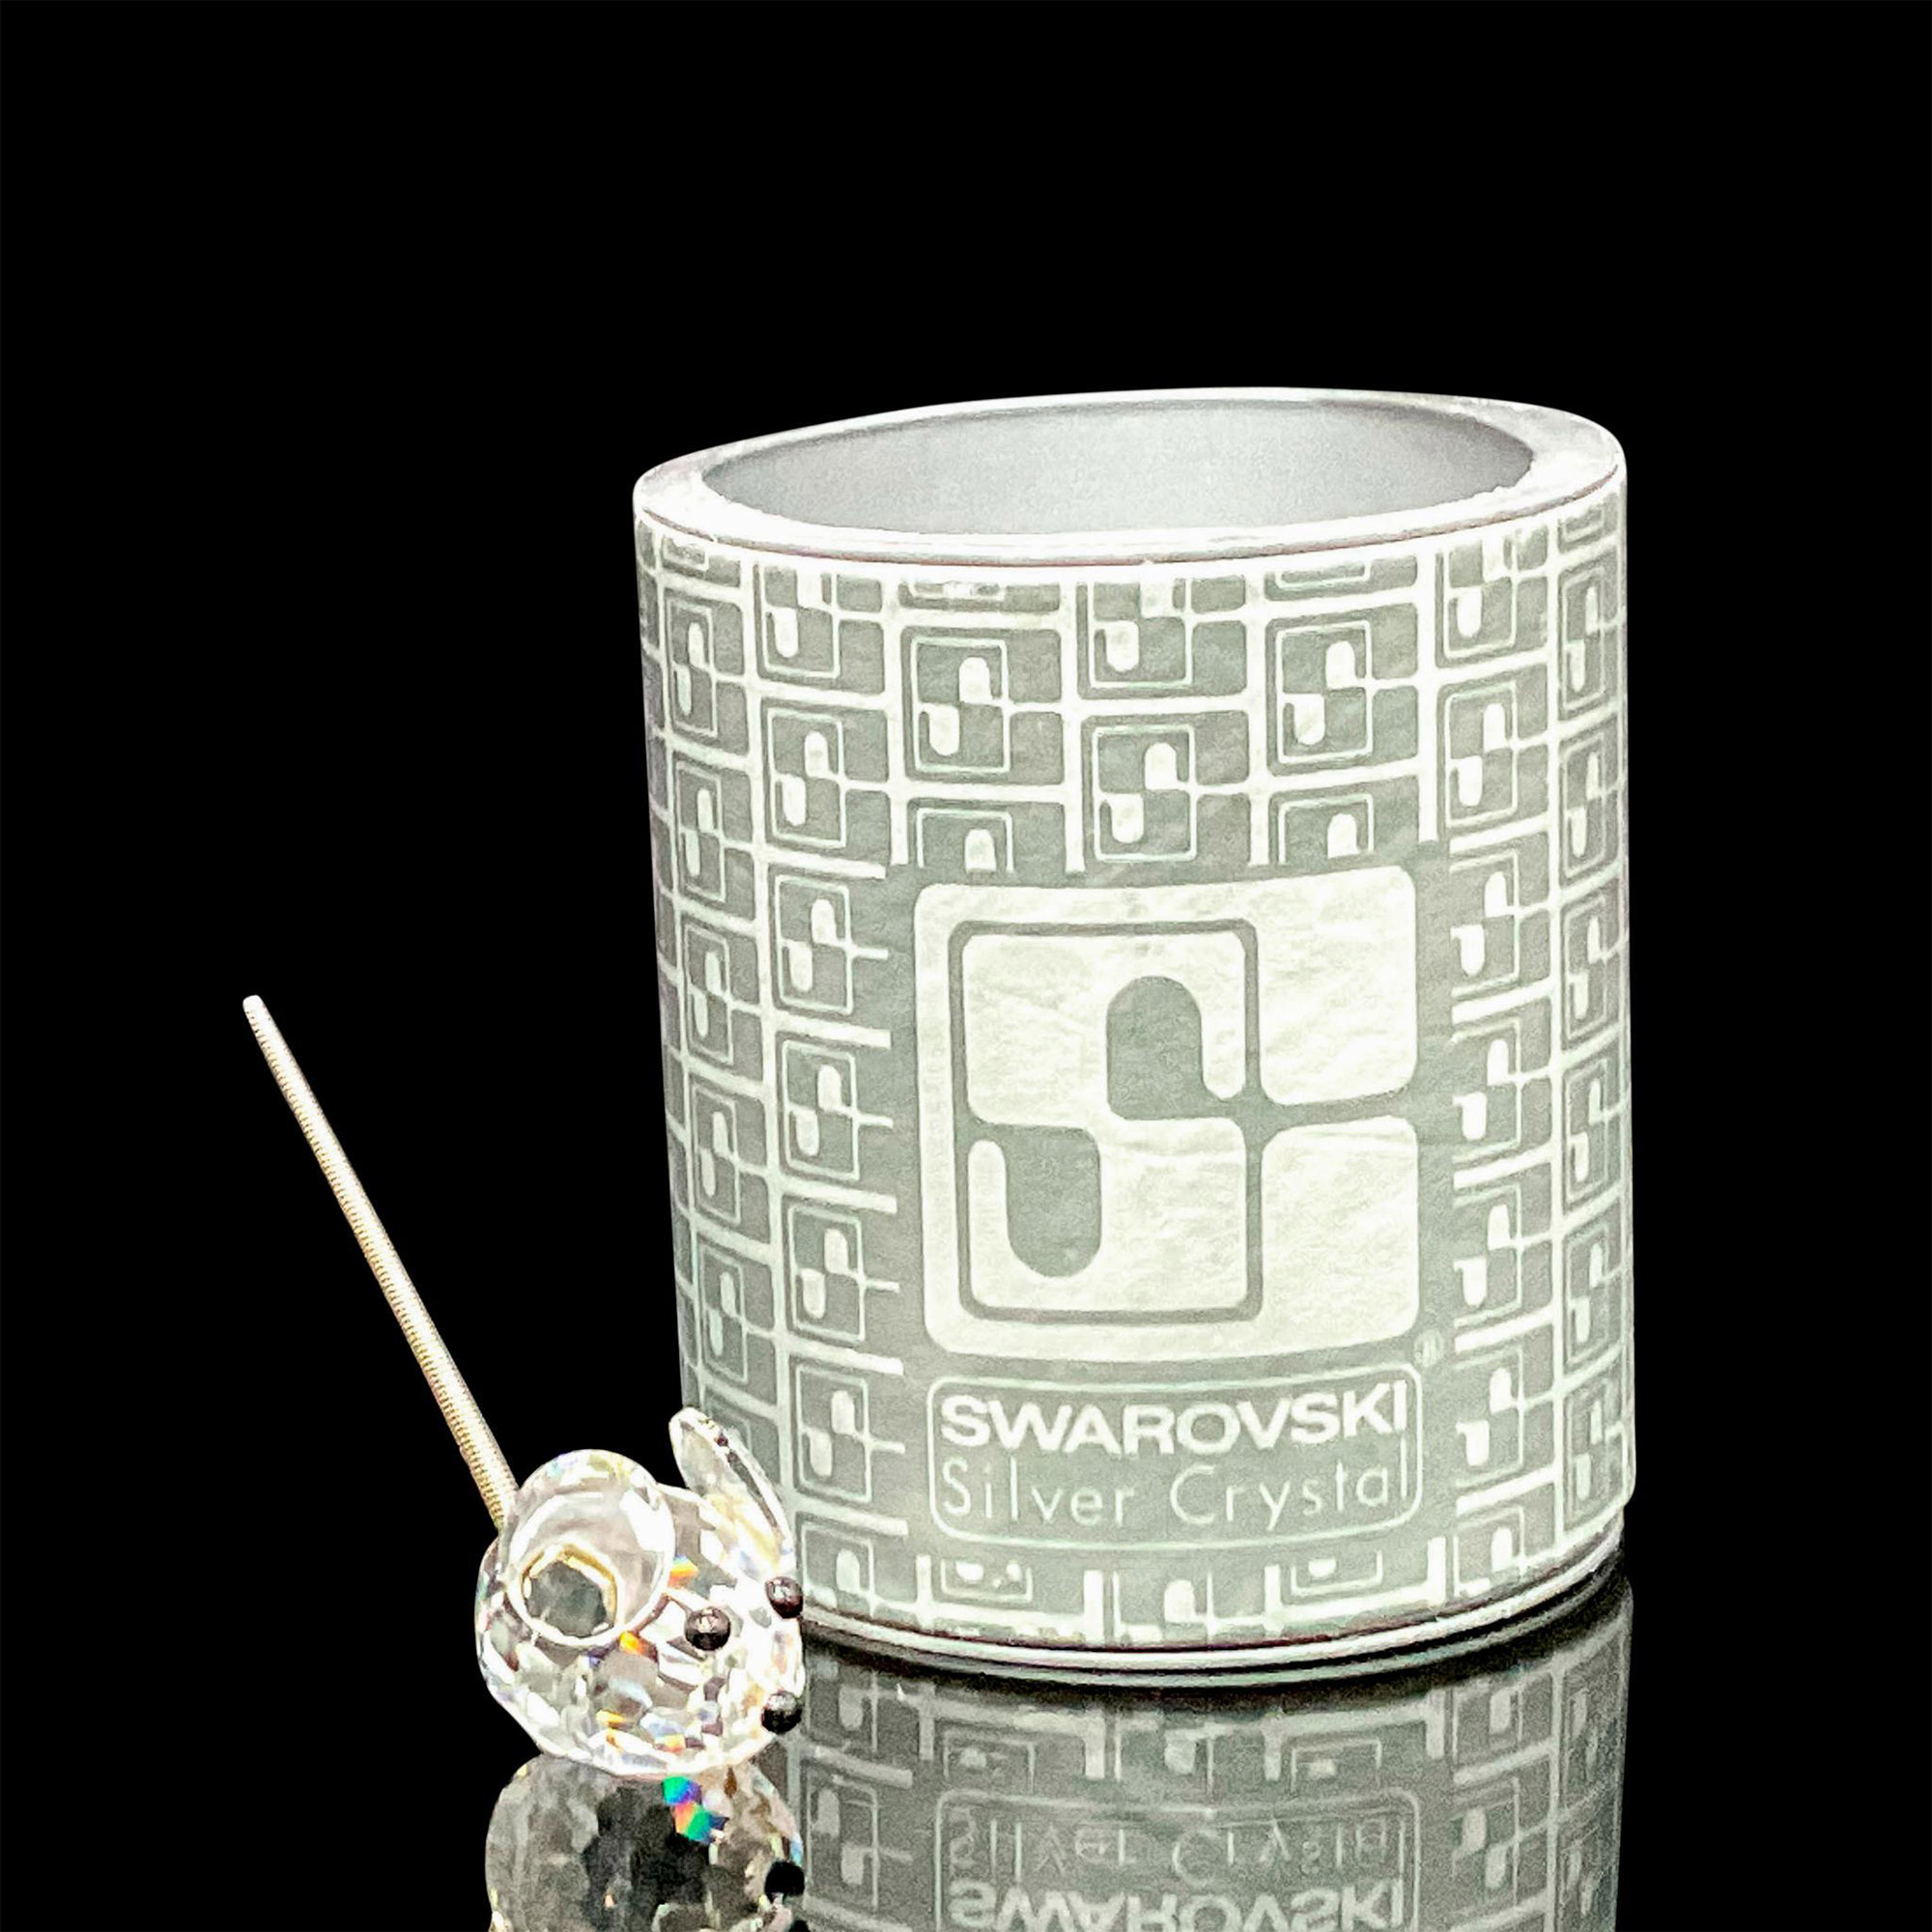 Swarovski Silver Crystal Figurine, Mini Mouse - Image 2 of 3